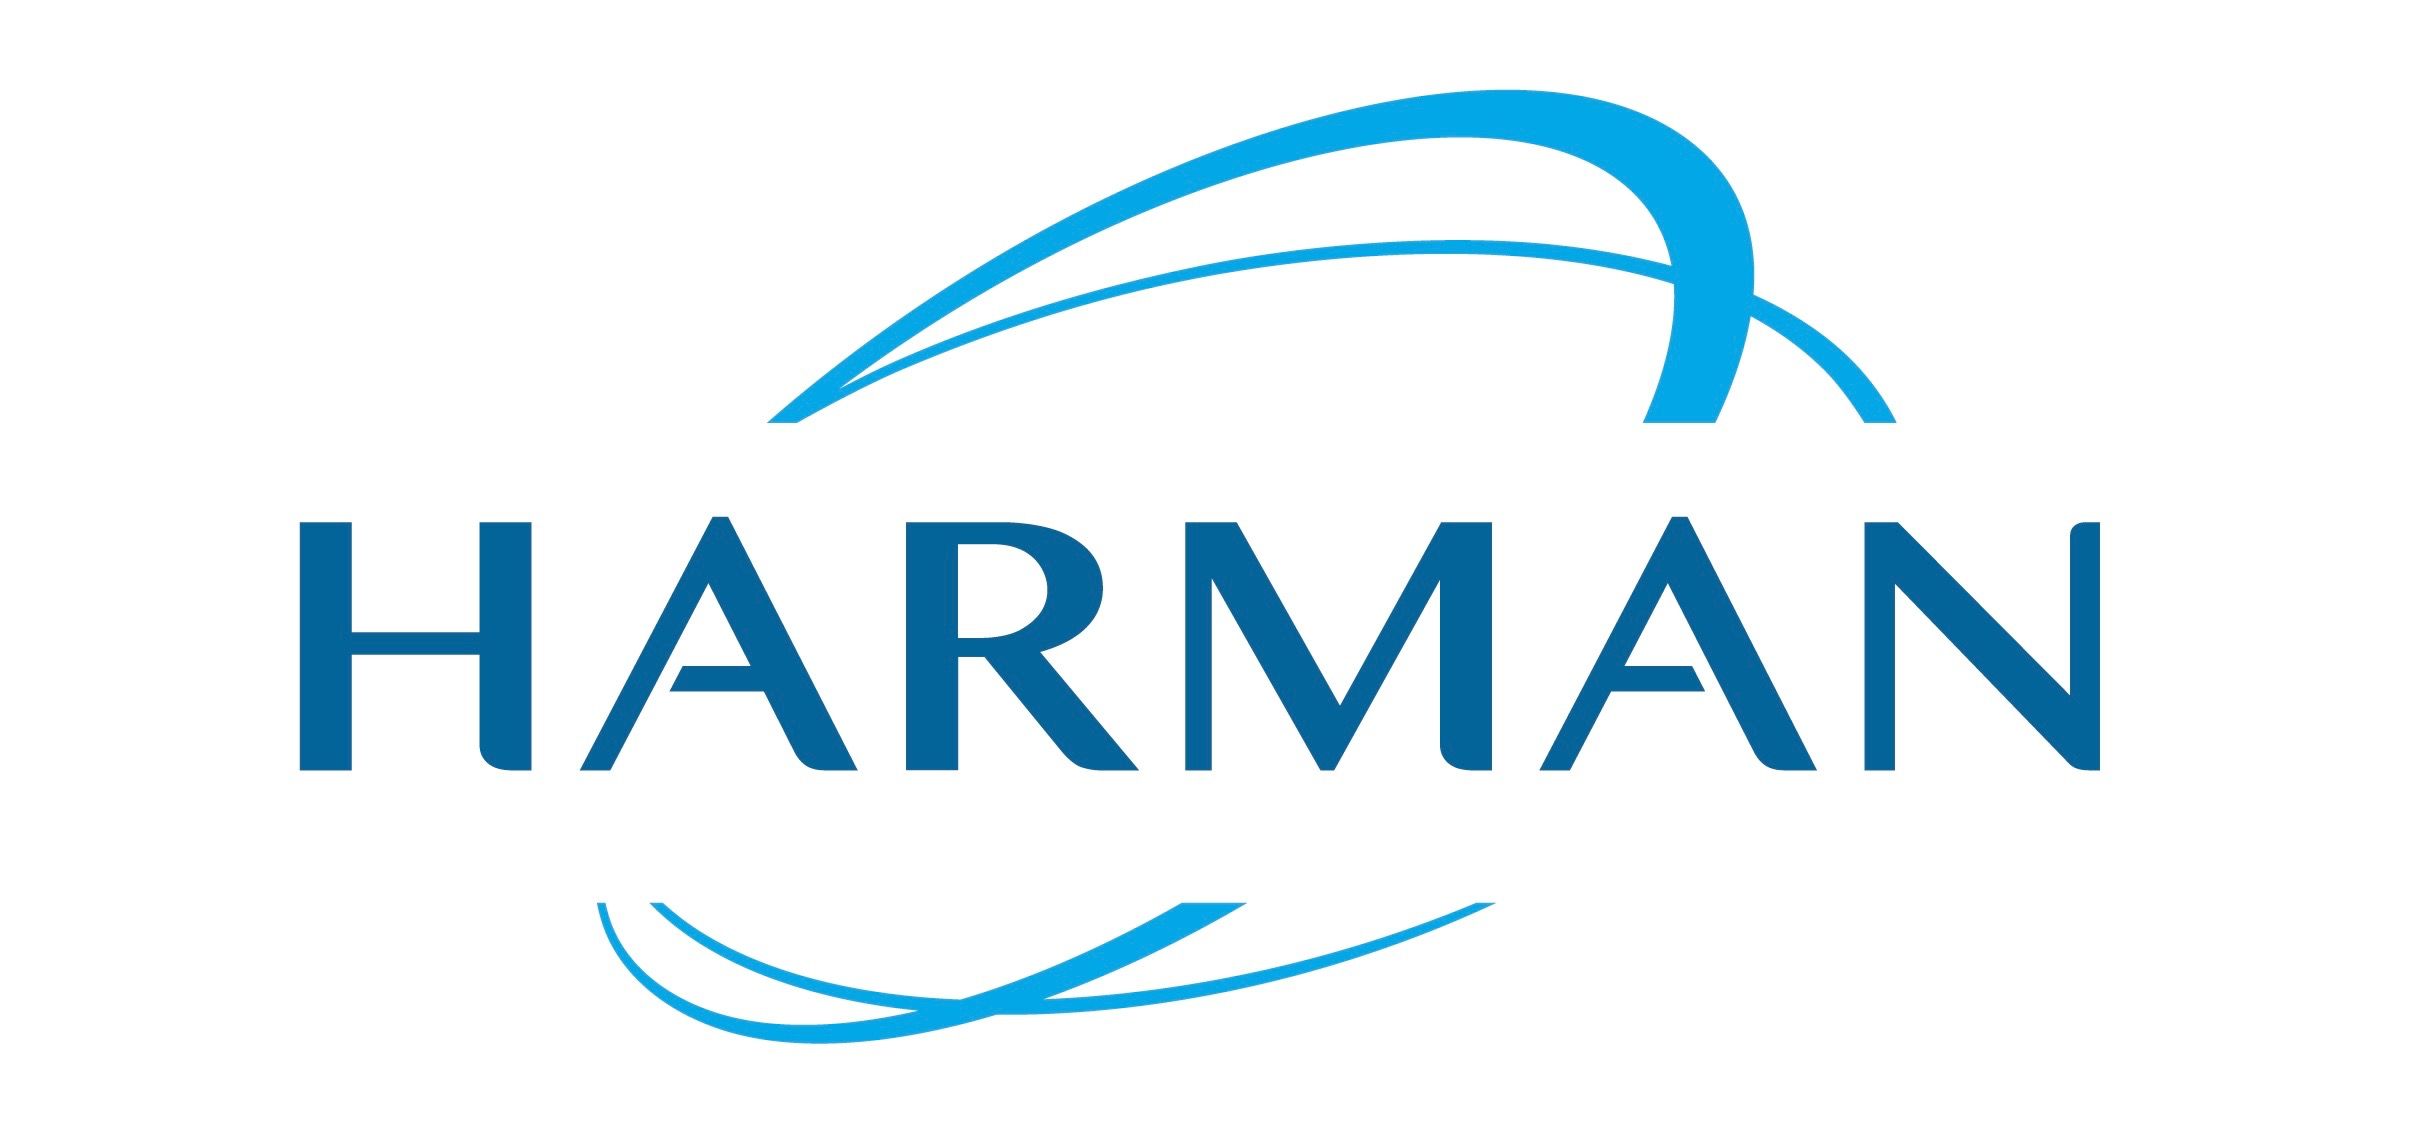 samsung acquires harman for 8 billion image 1